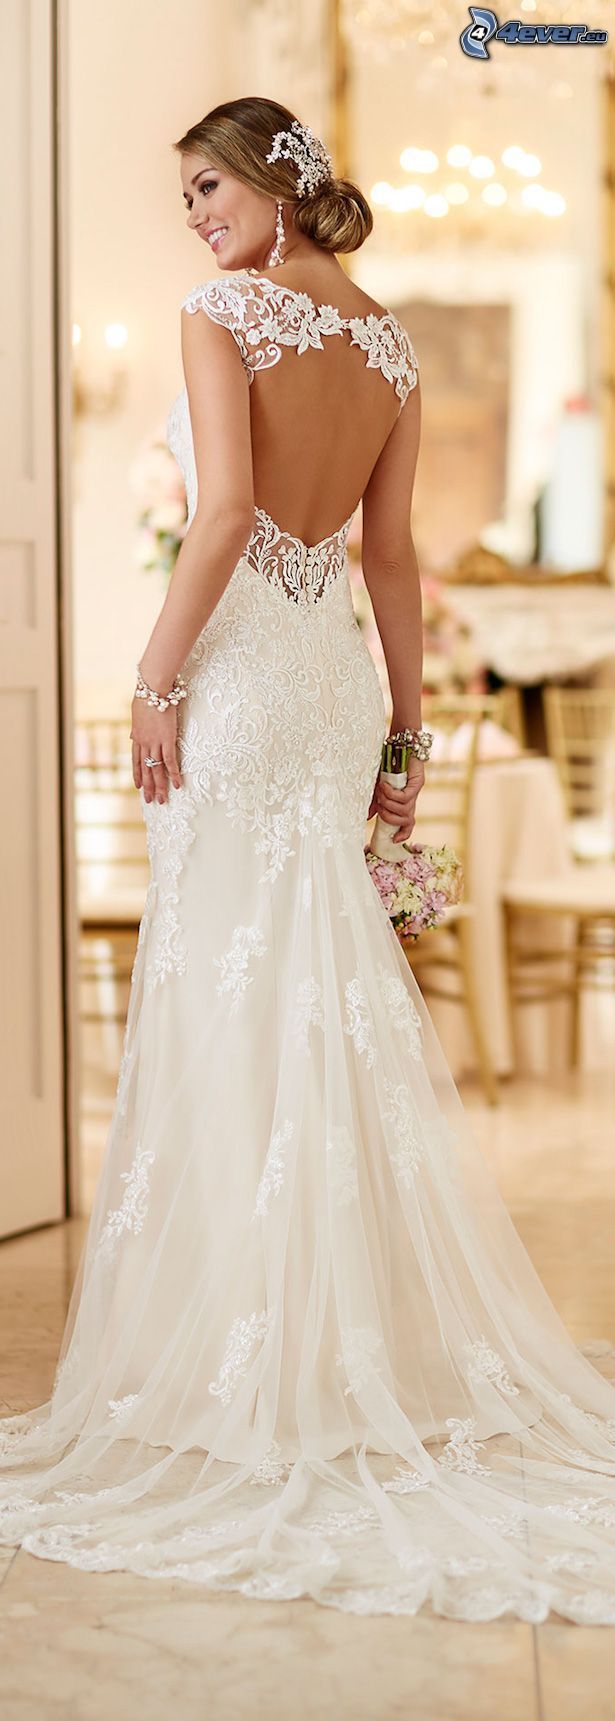 wedding dress, bride